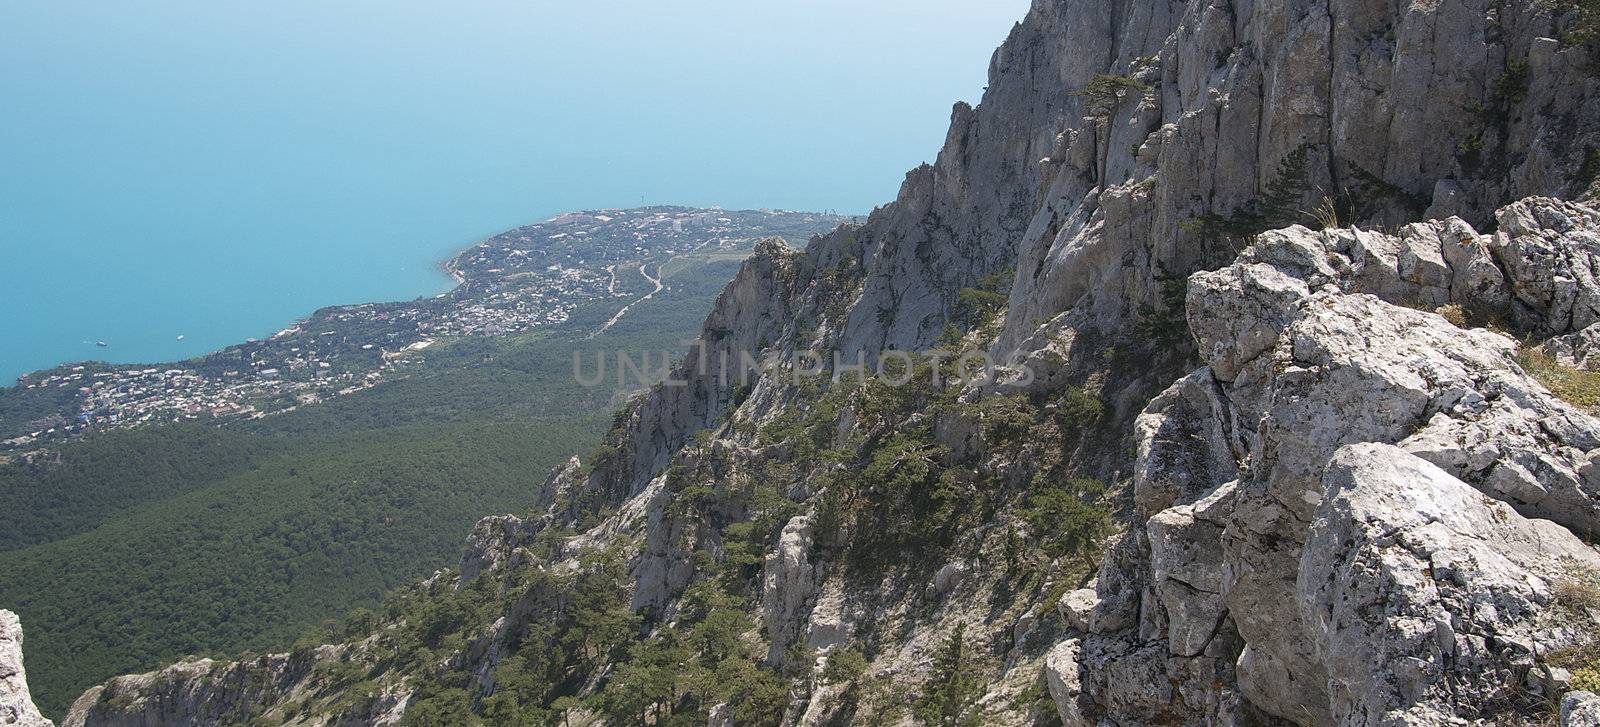 Mountain Crimea in Ukraine by Lester120